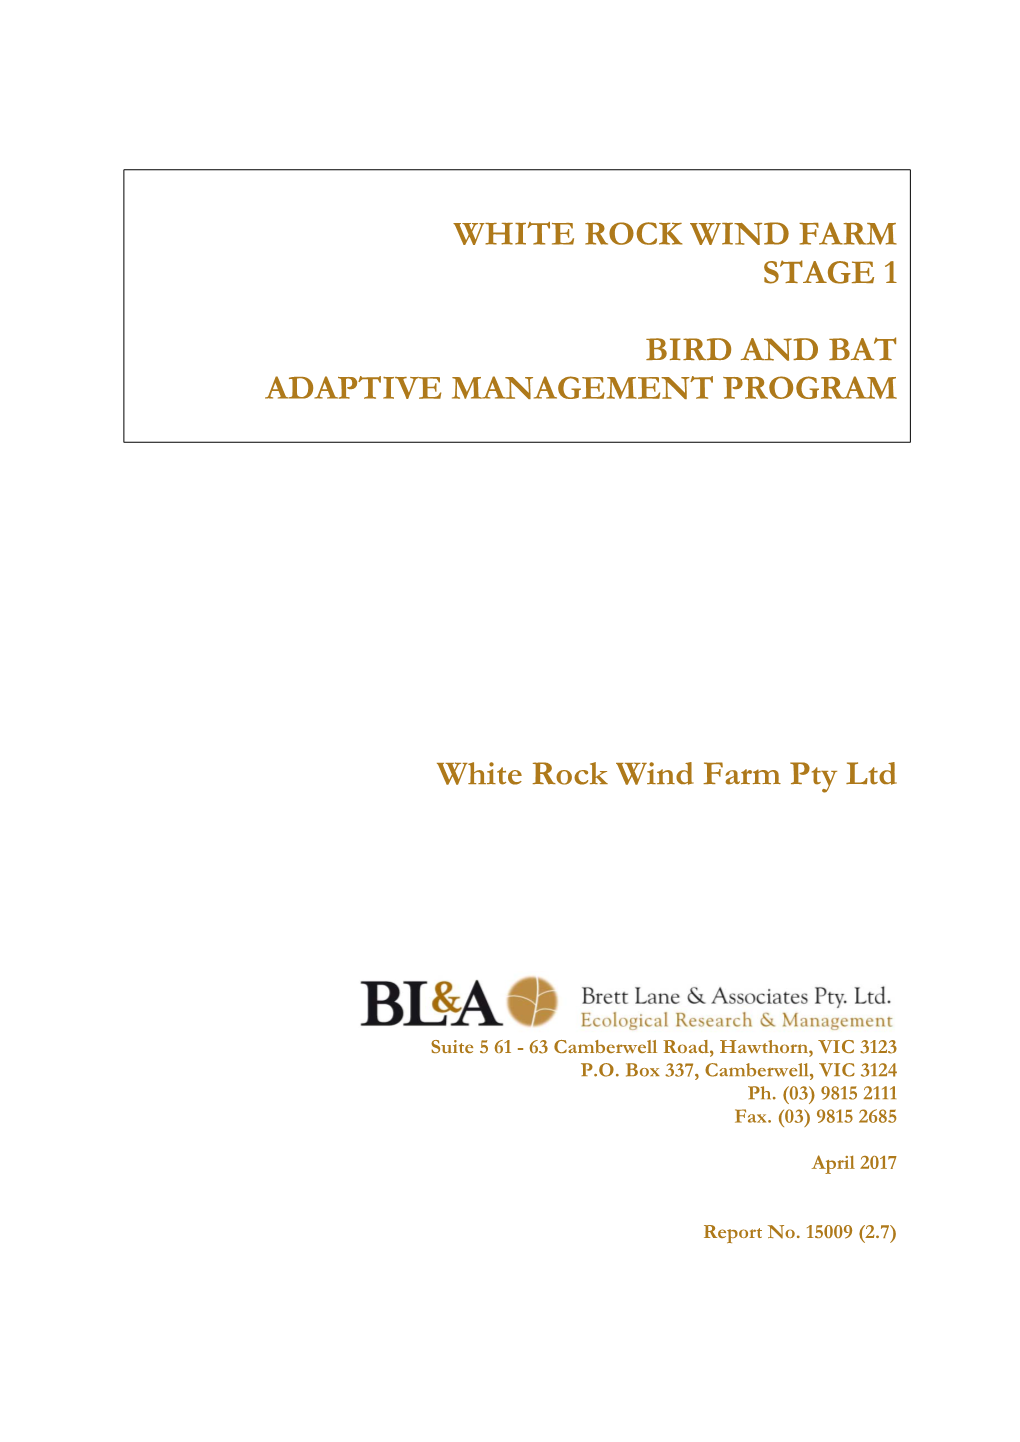 White Rock Wind Farm Stage 1 Bird and Bat Adaptive Management Program